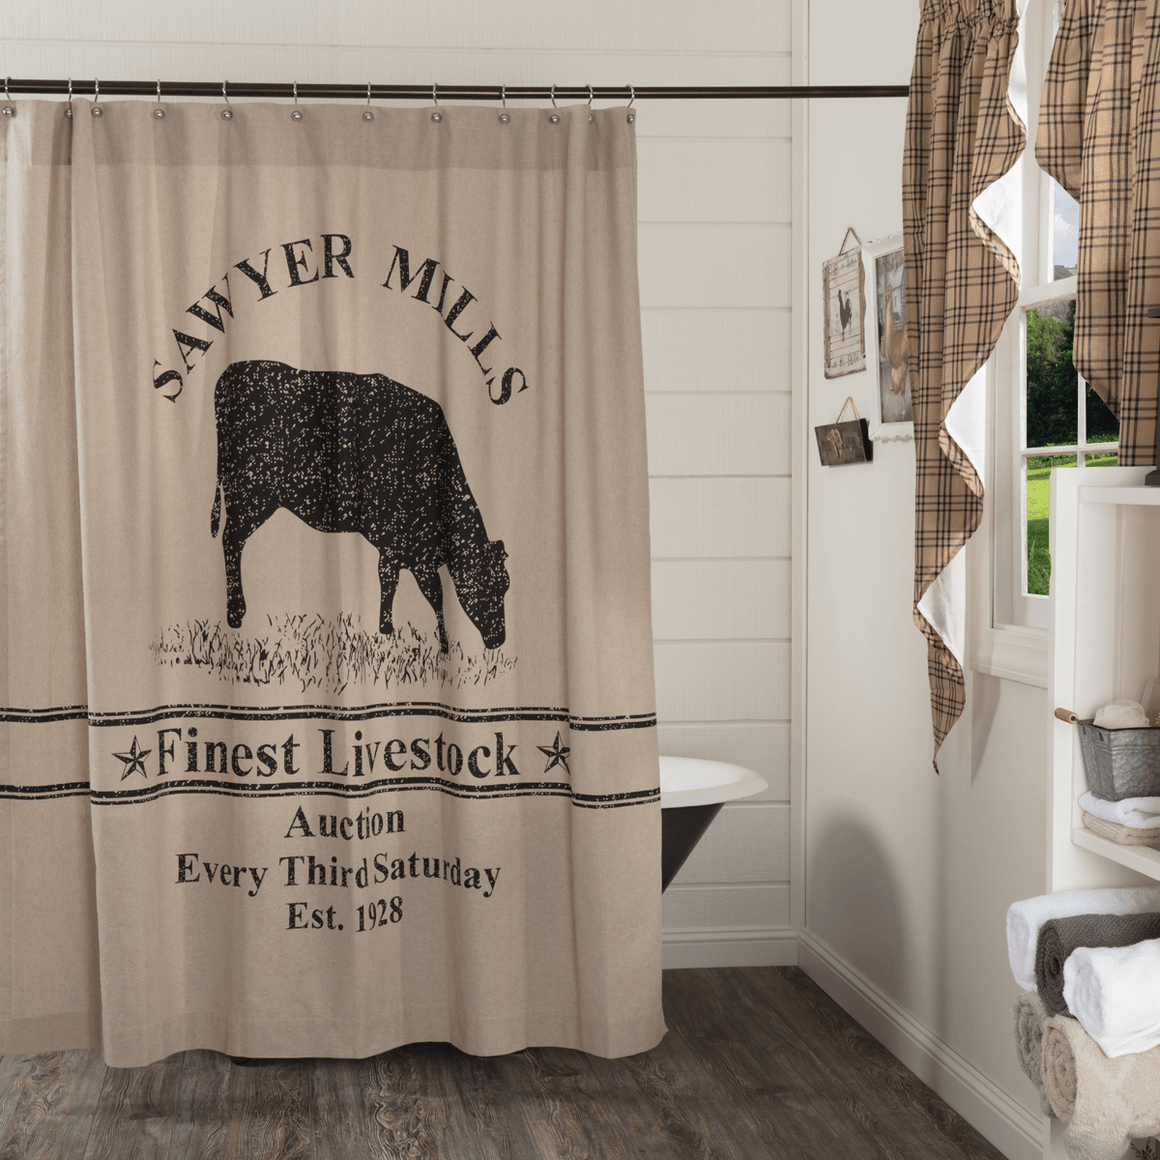 Sawyer Mill Shower Curtain - Cow